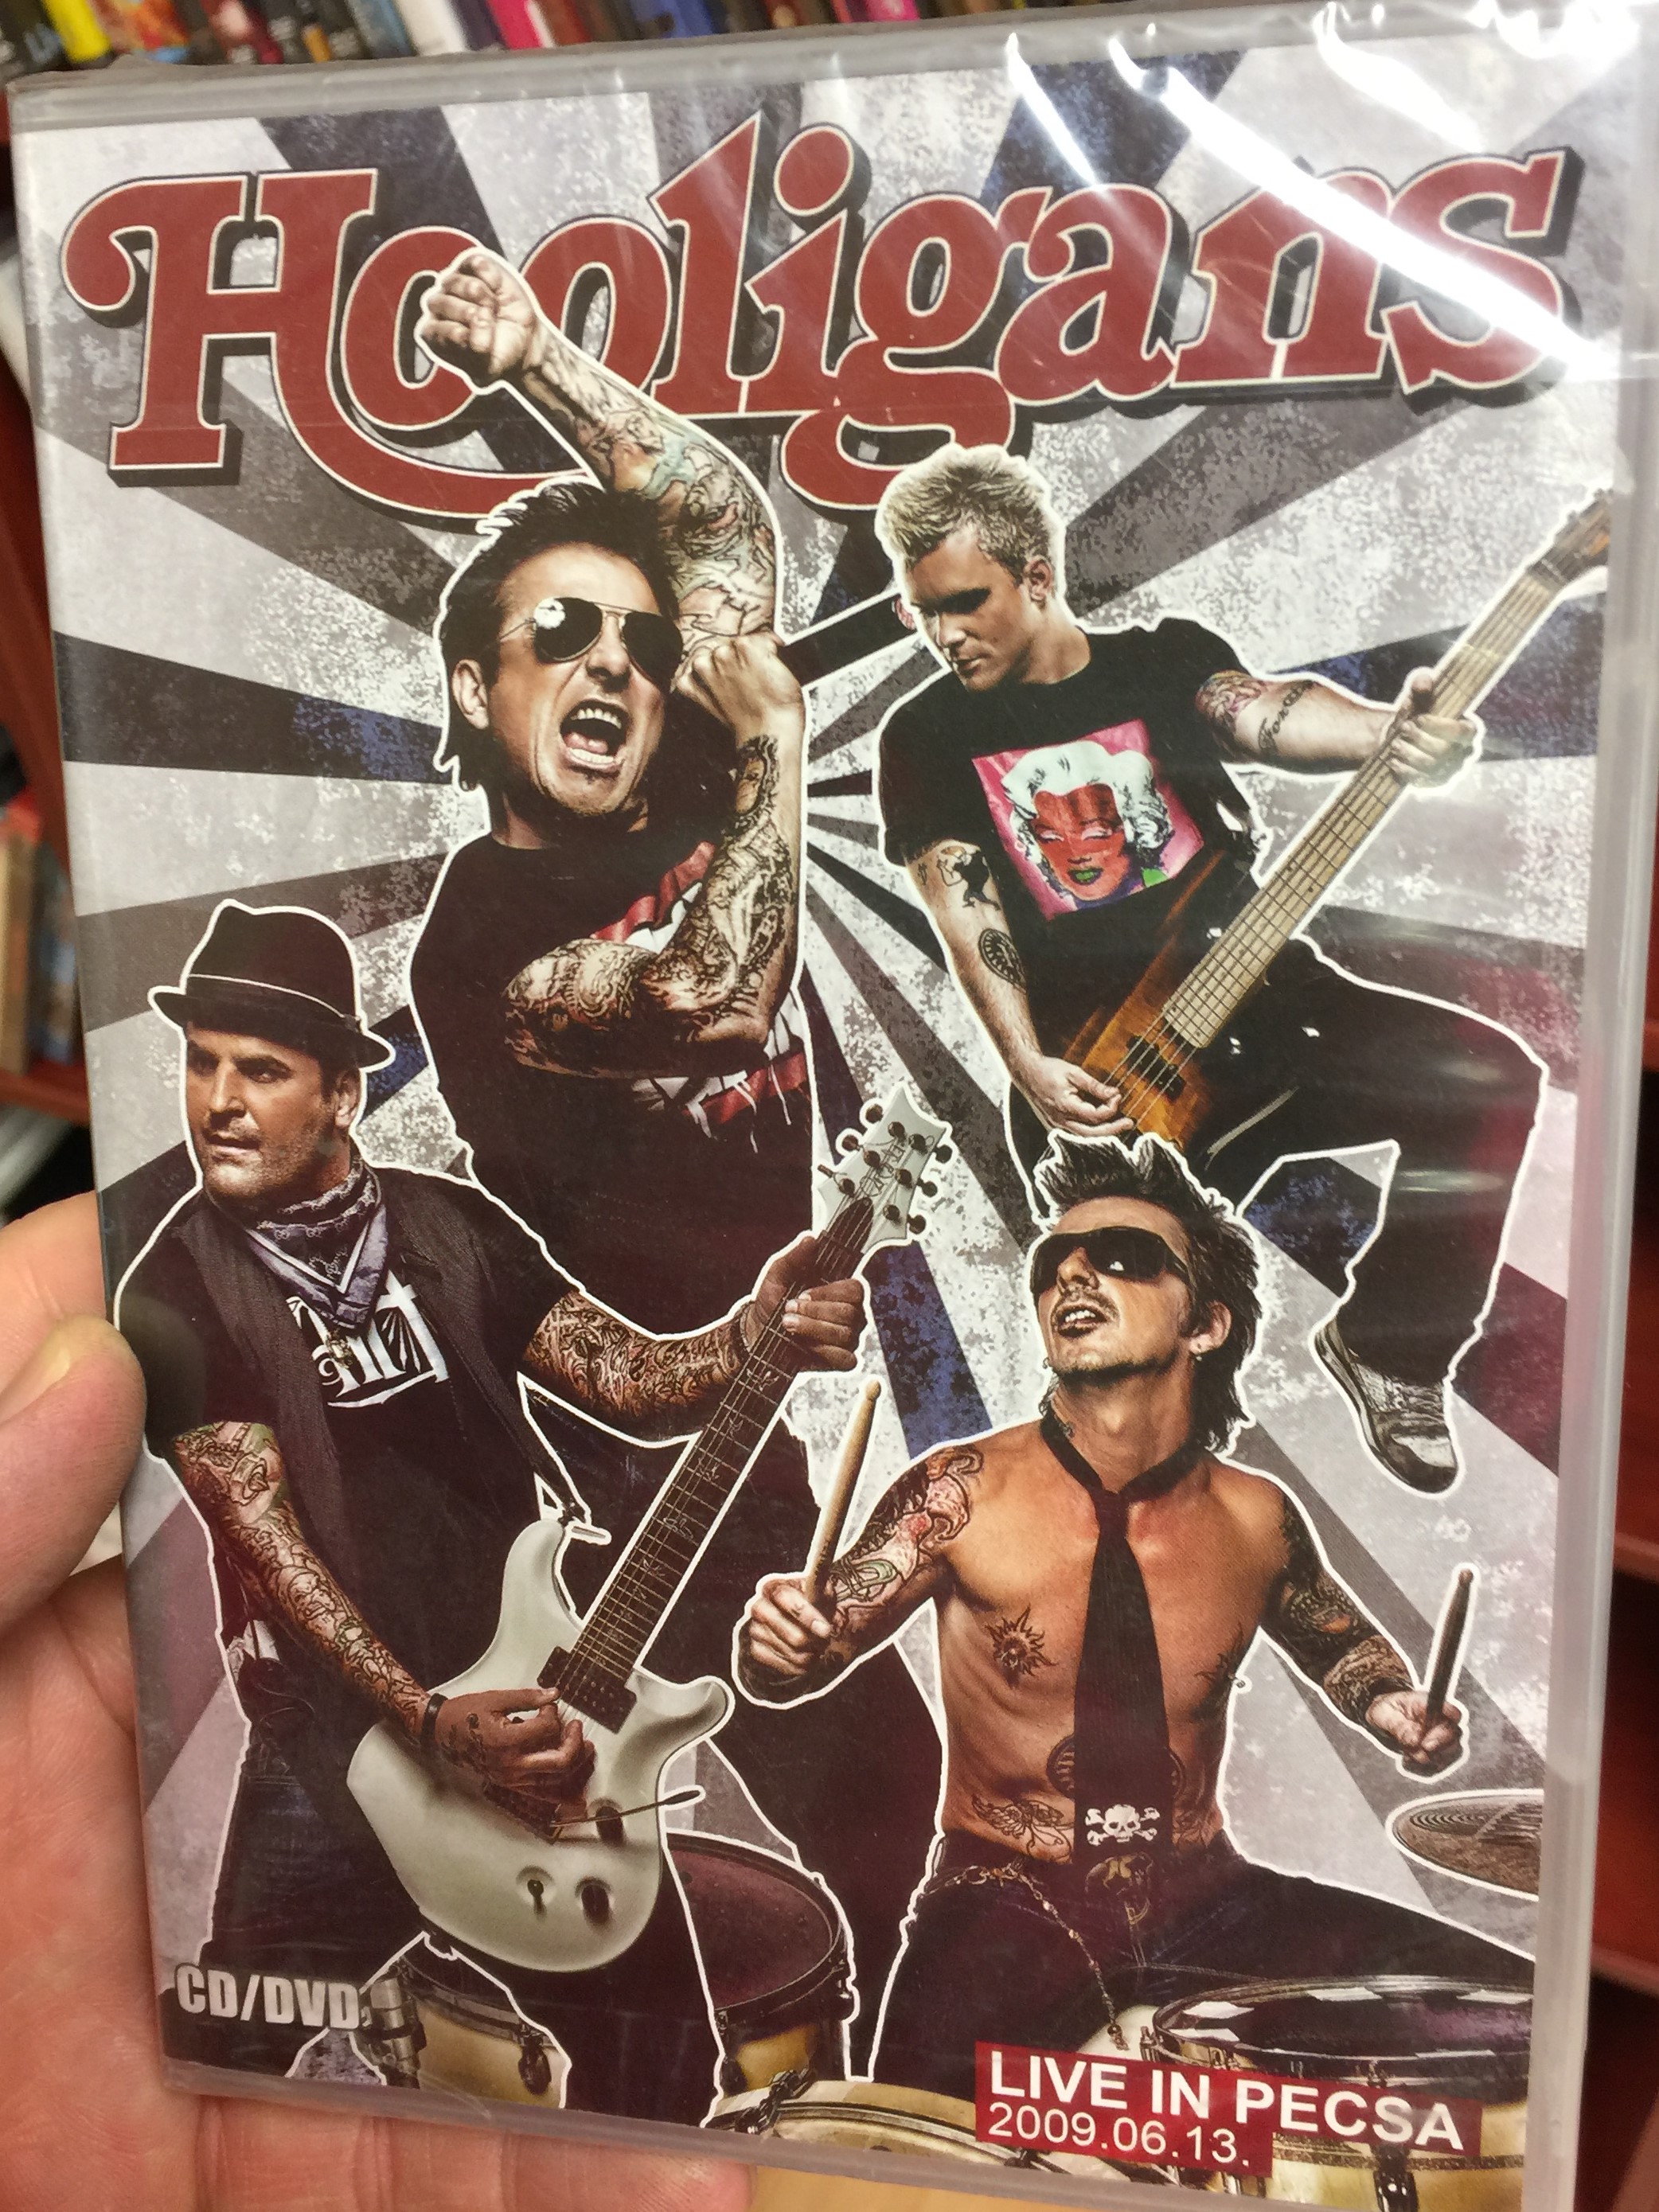 Hooligans DVD 2009 Live in Pecsa 1.JPG